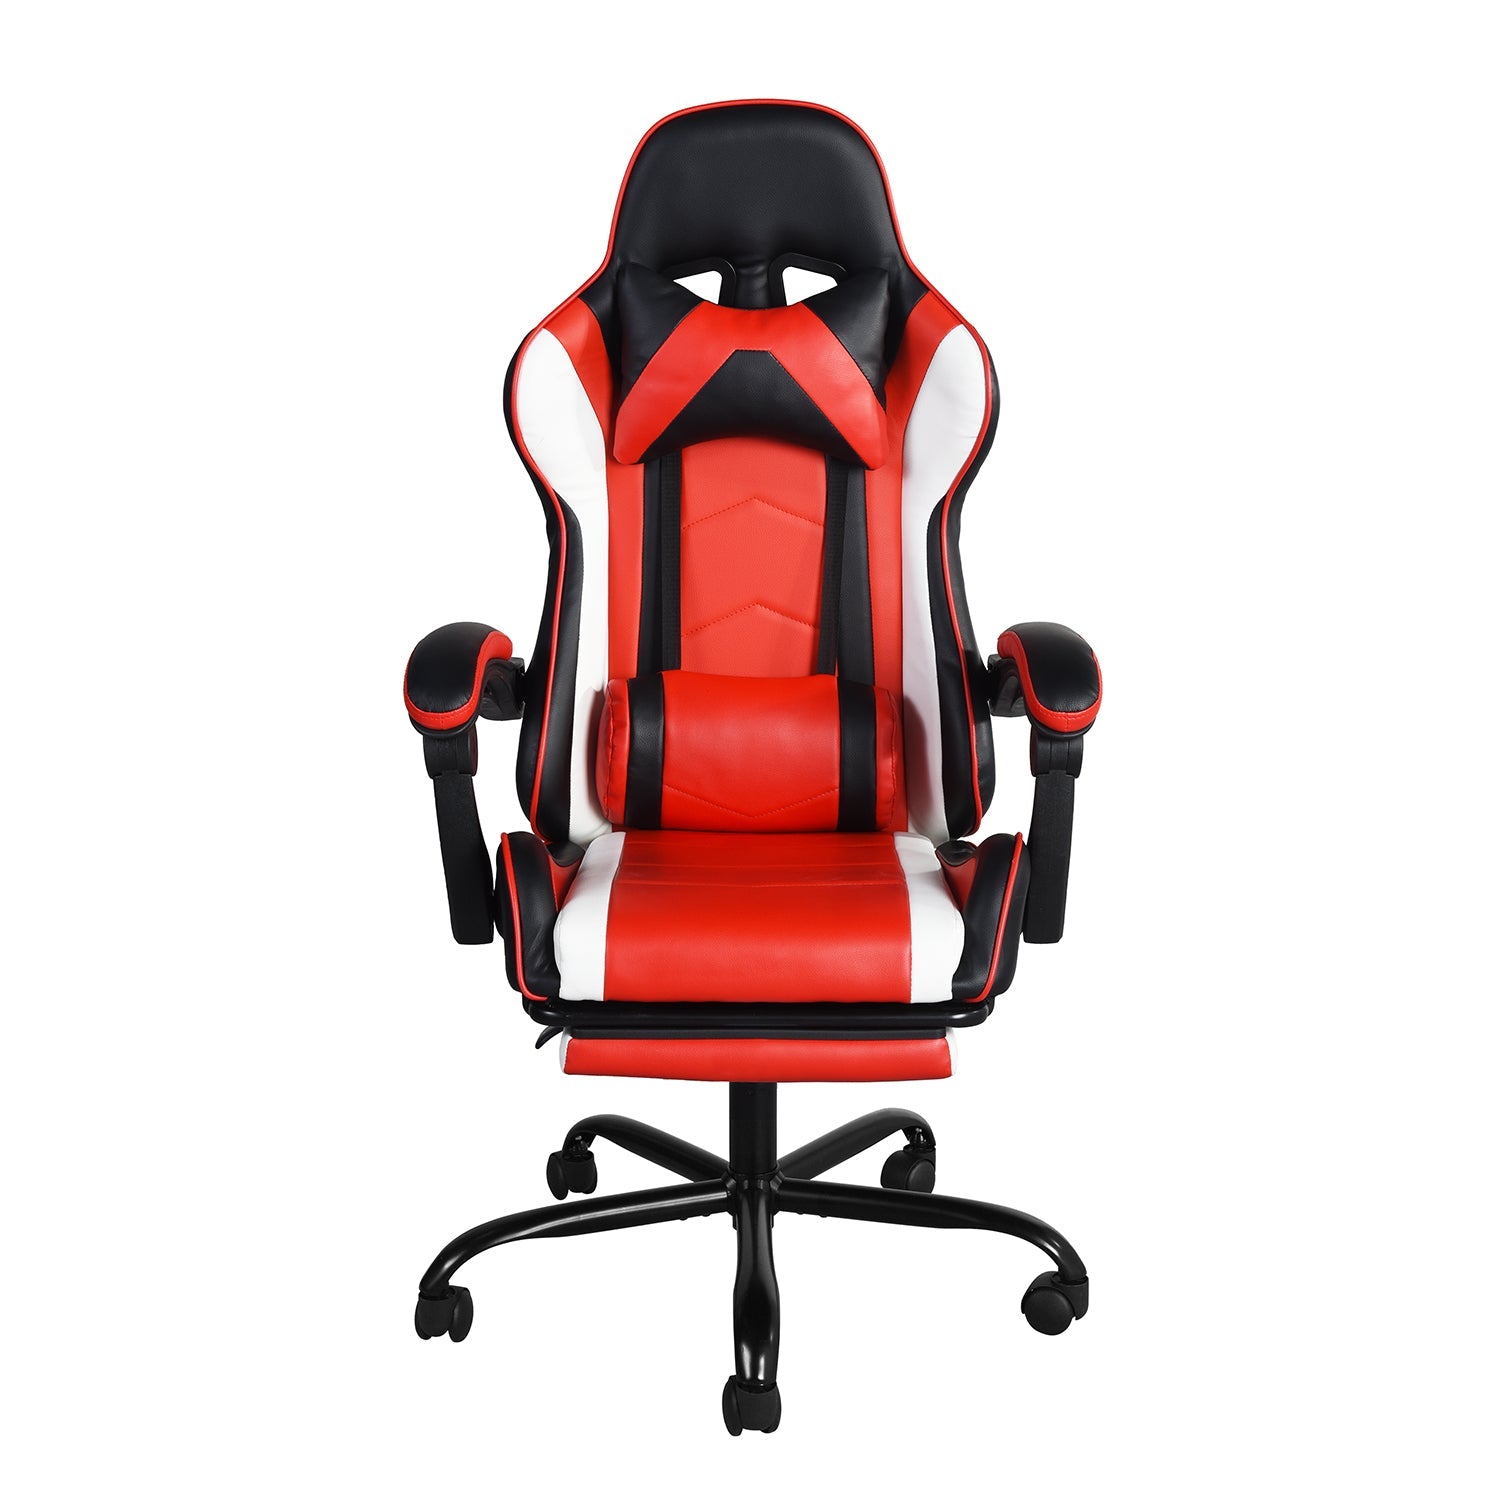 Vantana Game Chair